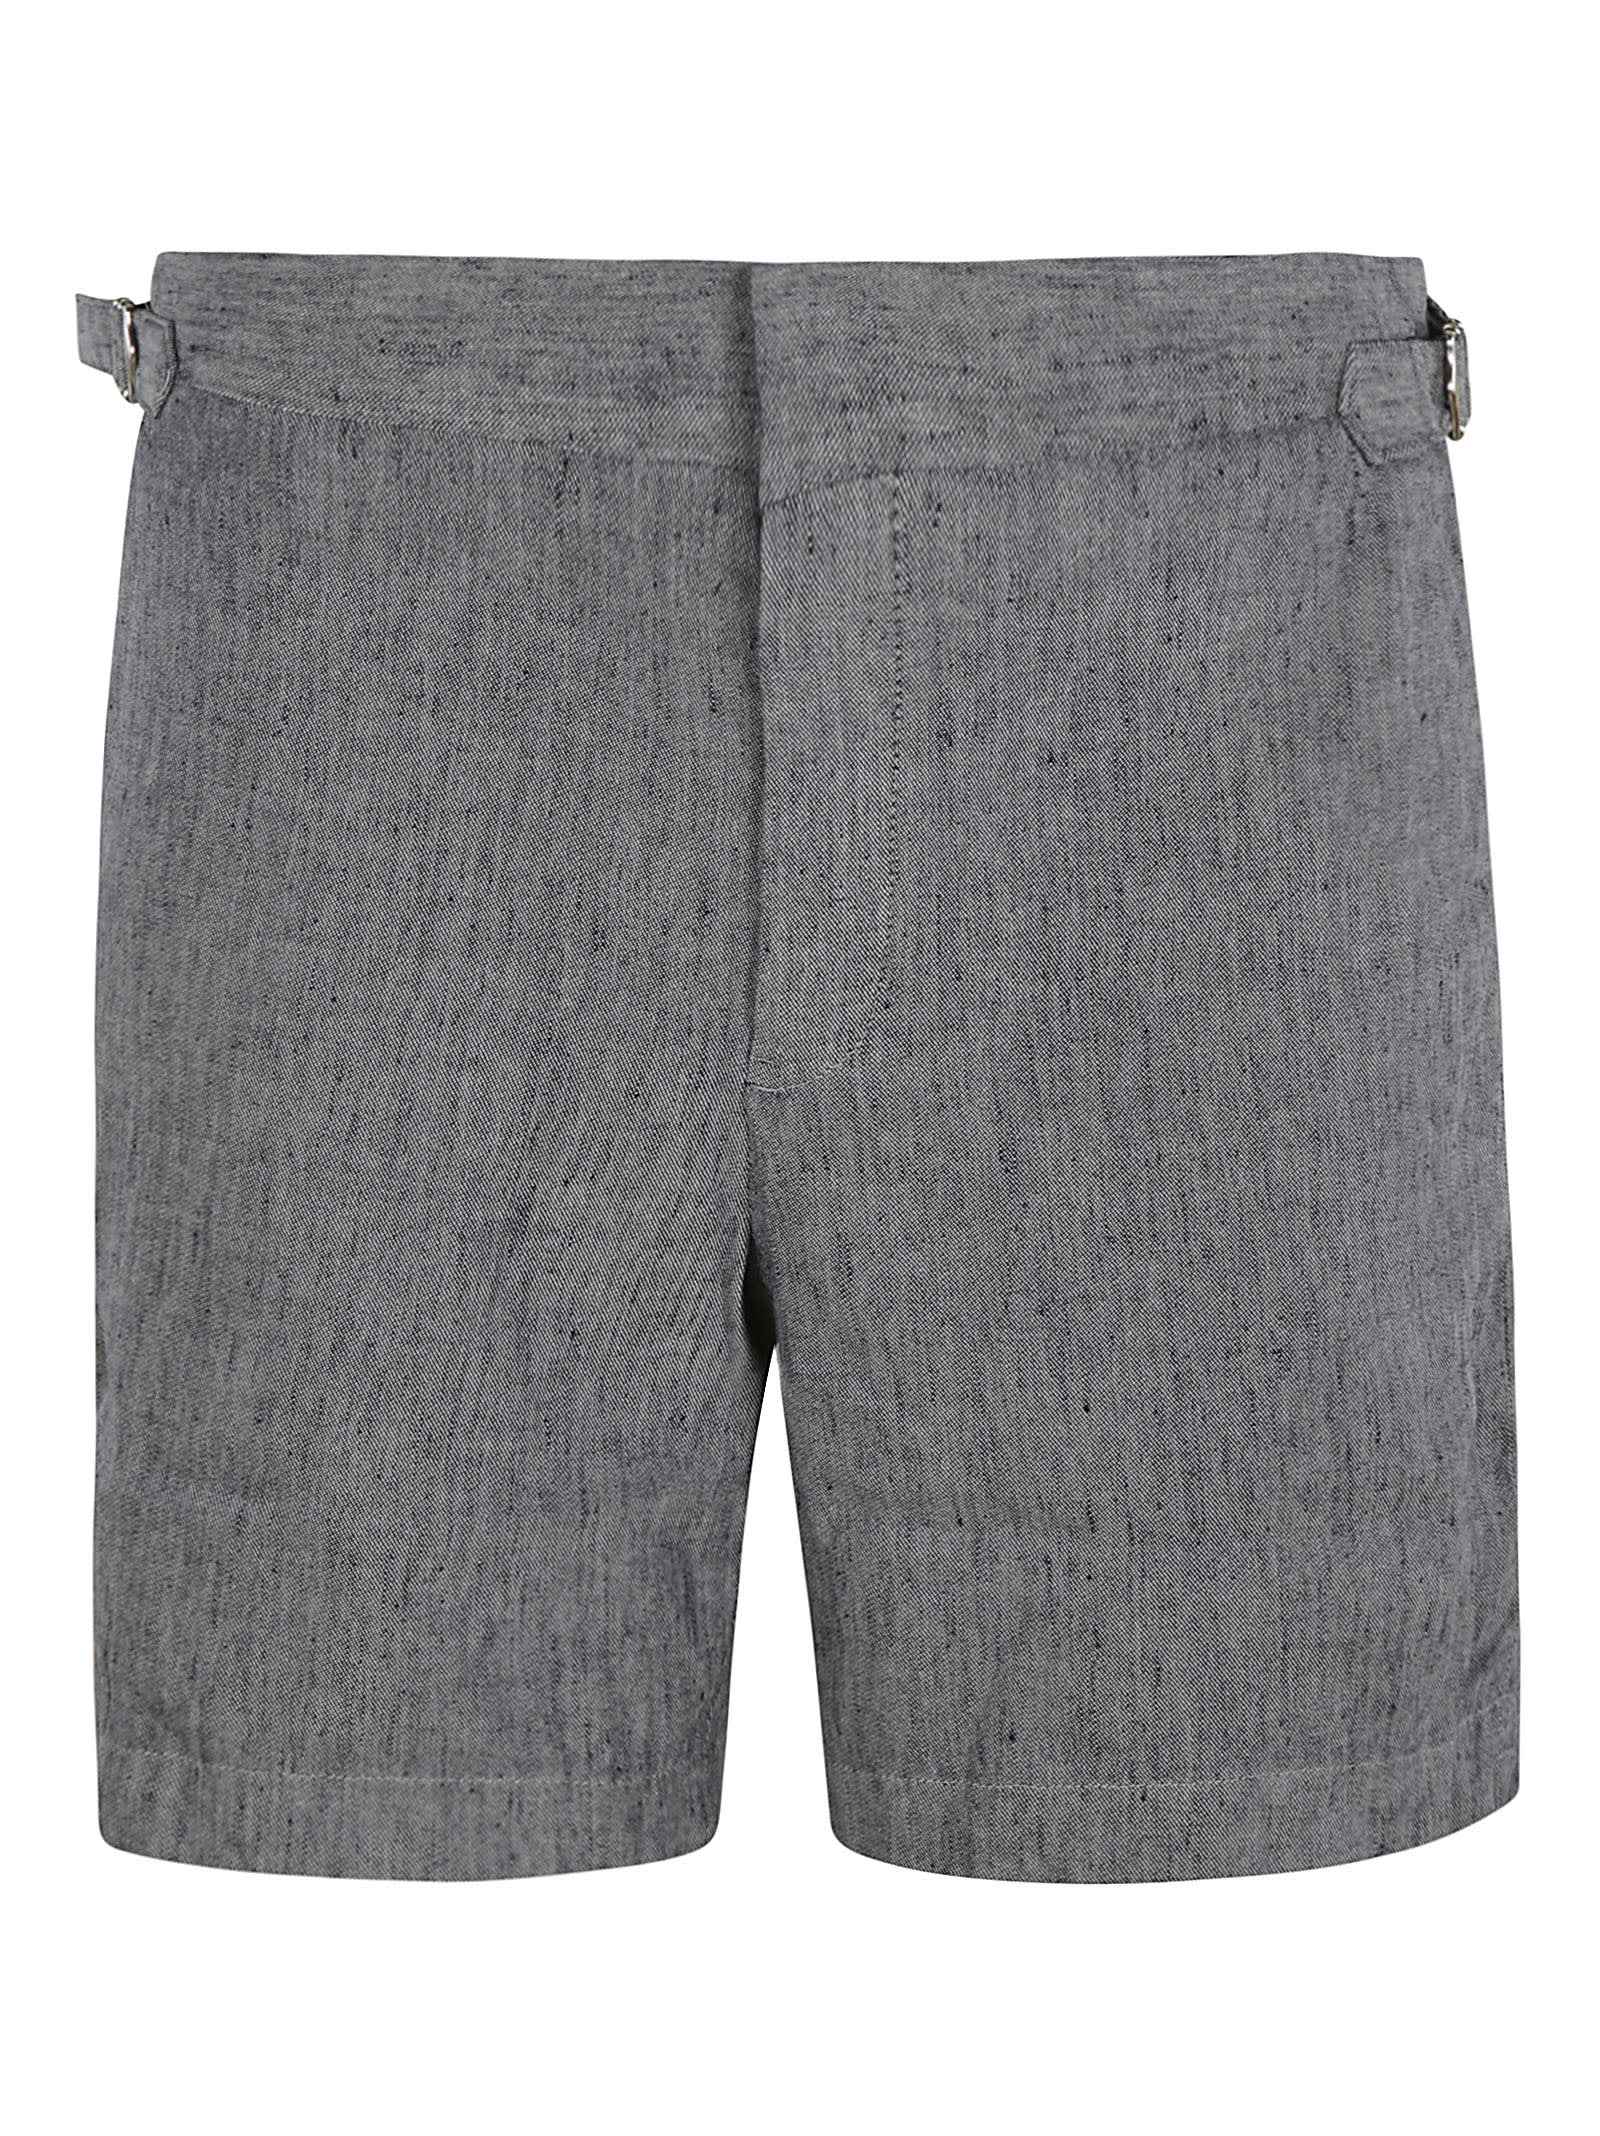 Michael Kors Concealed Shorts